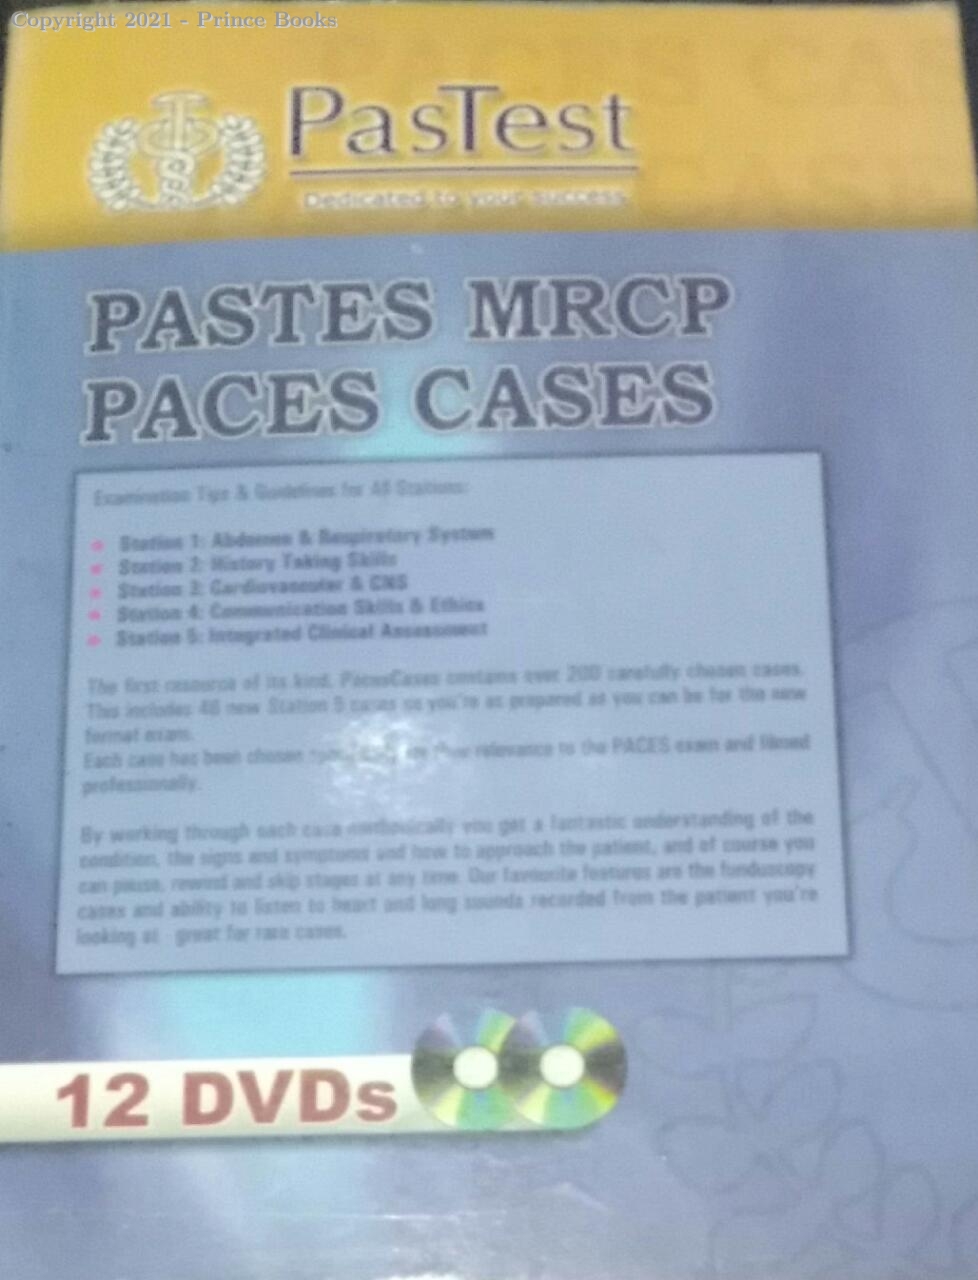 pastest mrcp paces cases